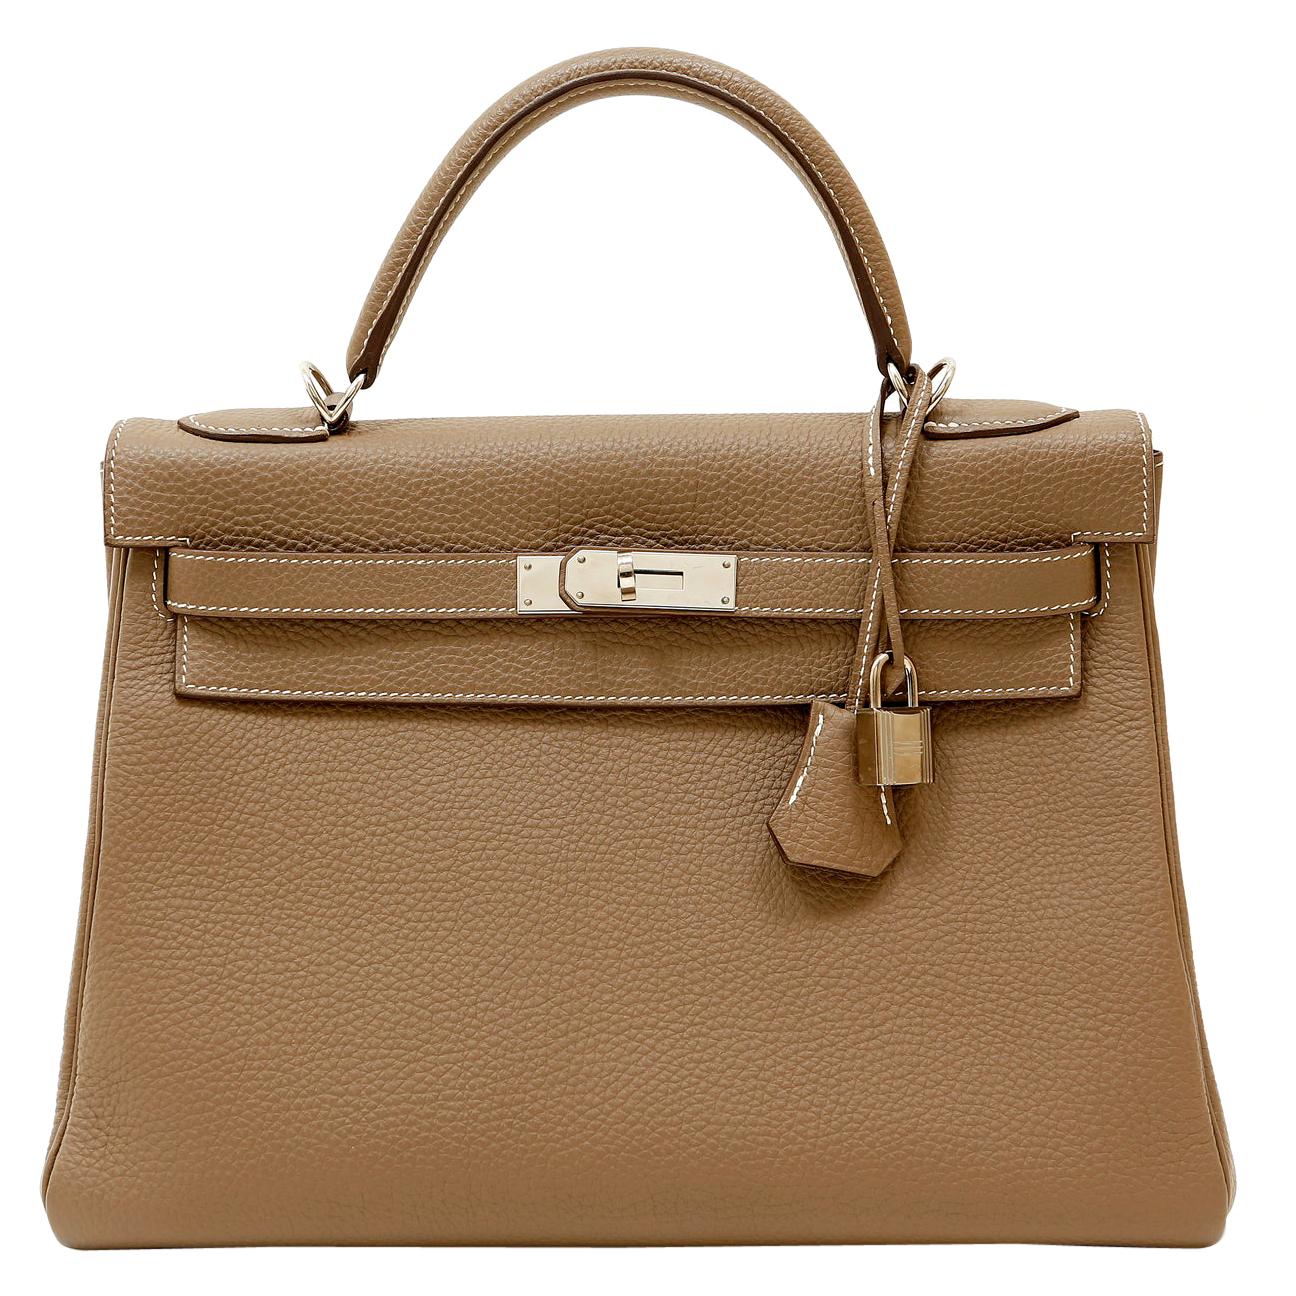 Hermès Taupe Togo Leather 32 cm Kelly Bag with Palladium